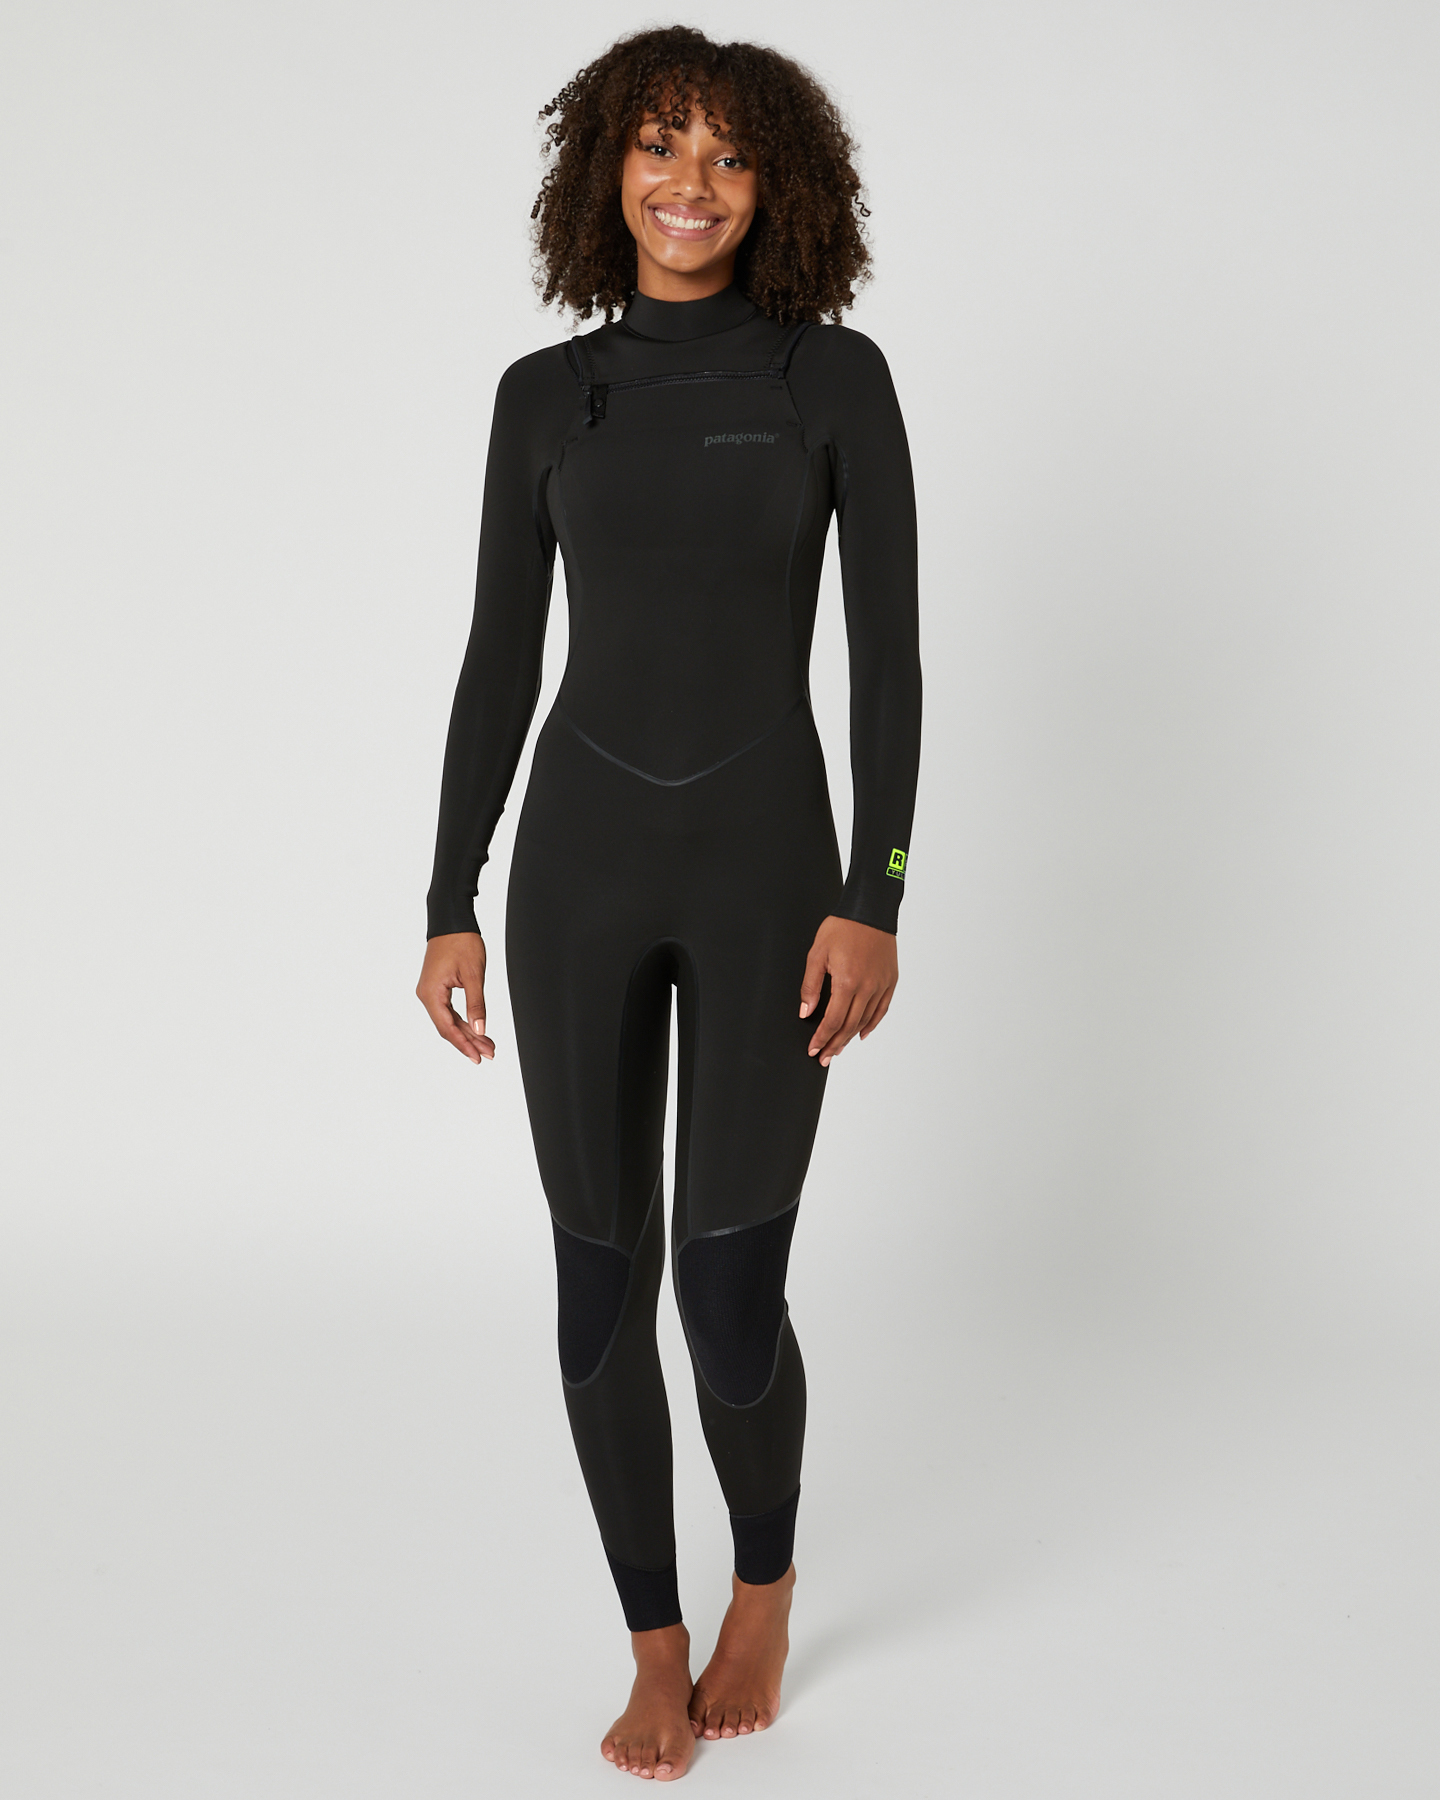 Patagonia Womens R2 Yulex Fz Full Suit Wetsuit - Black | SurfStitch